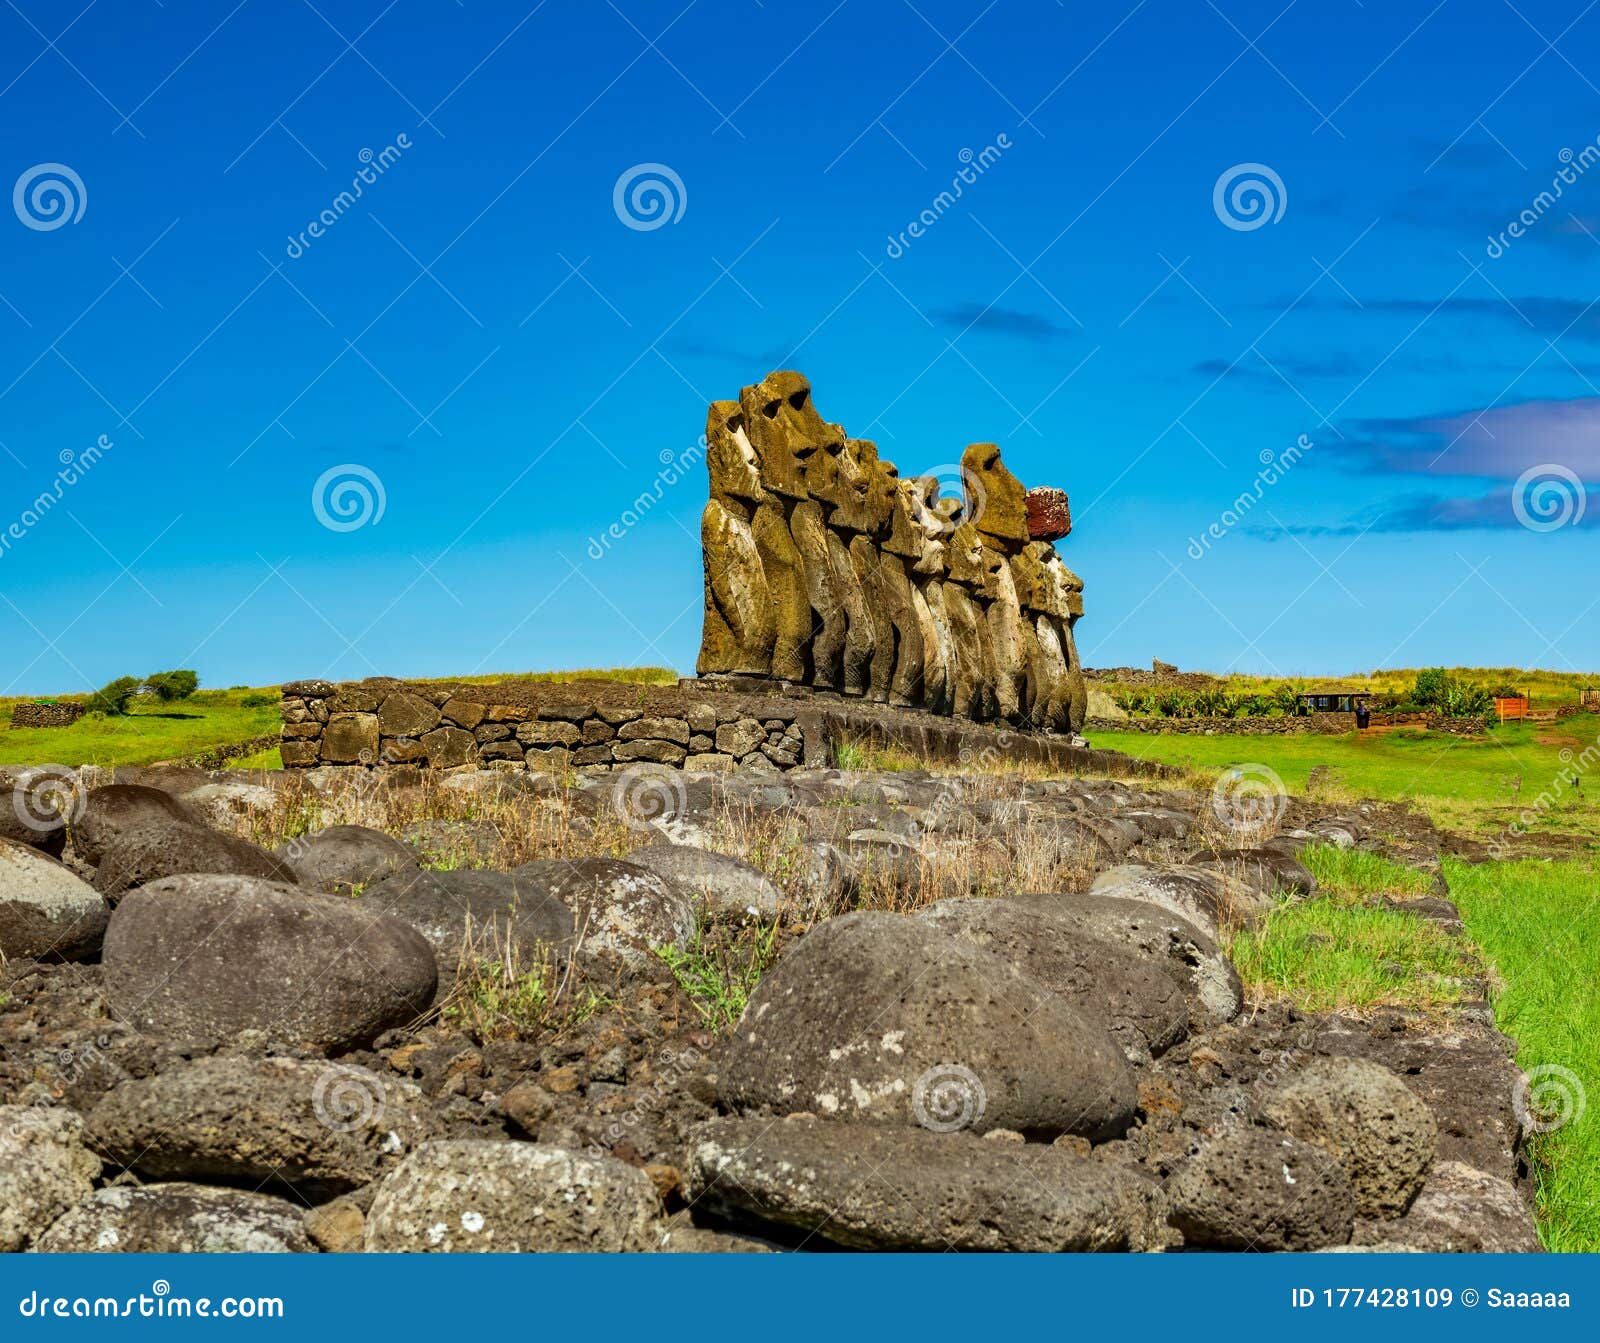 ahu tongariki moai platform profile view with text space